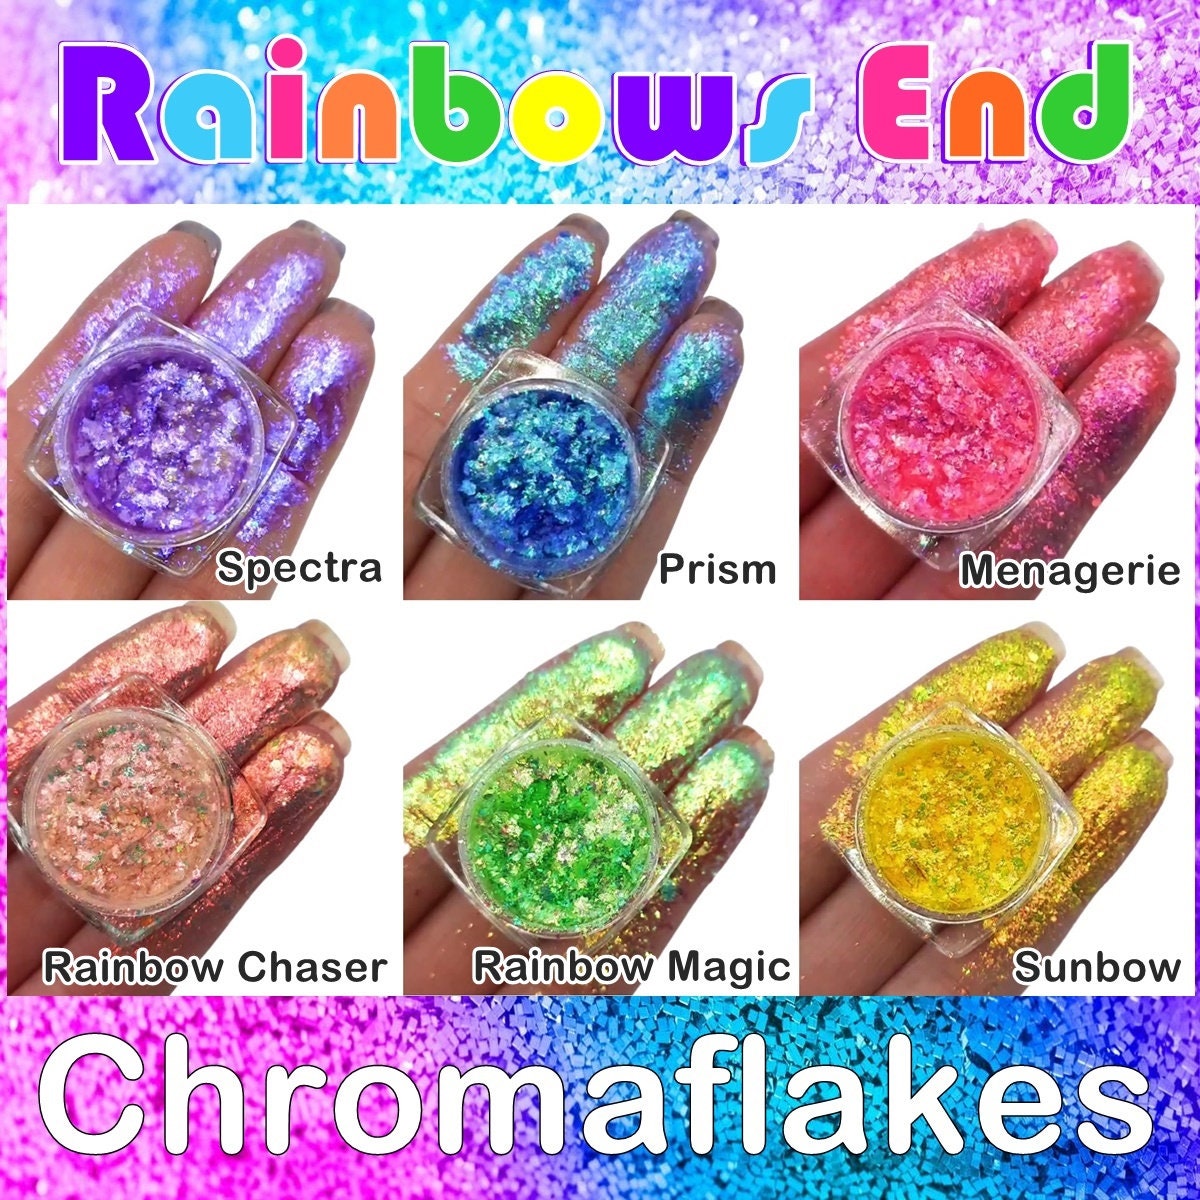 Sunbow-Chromaflake Eyeshadow Flakes